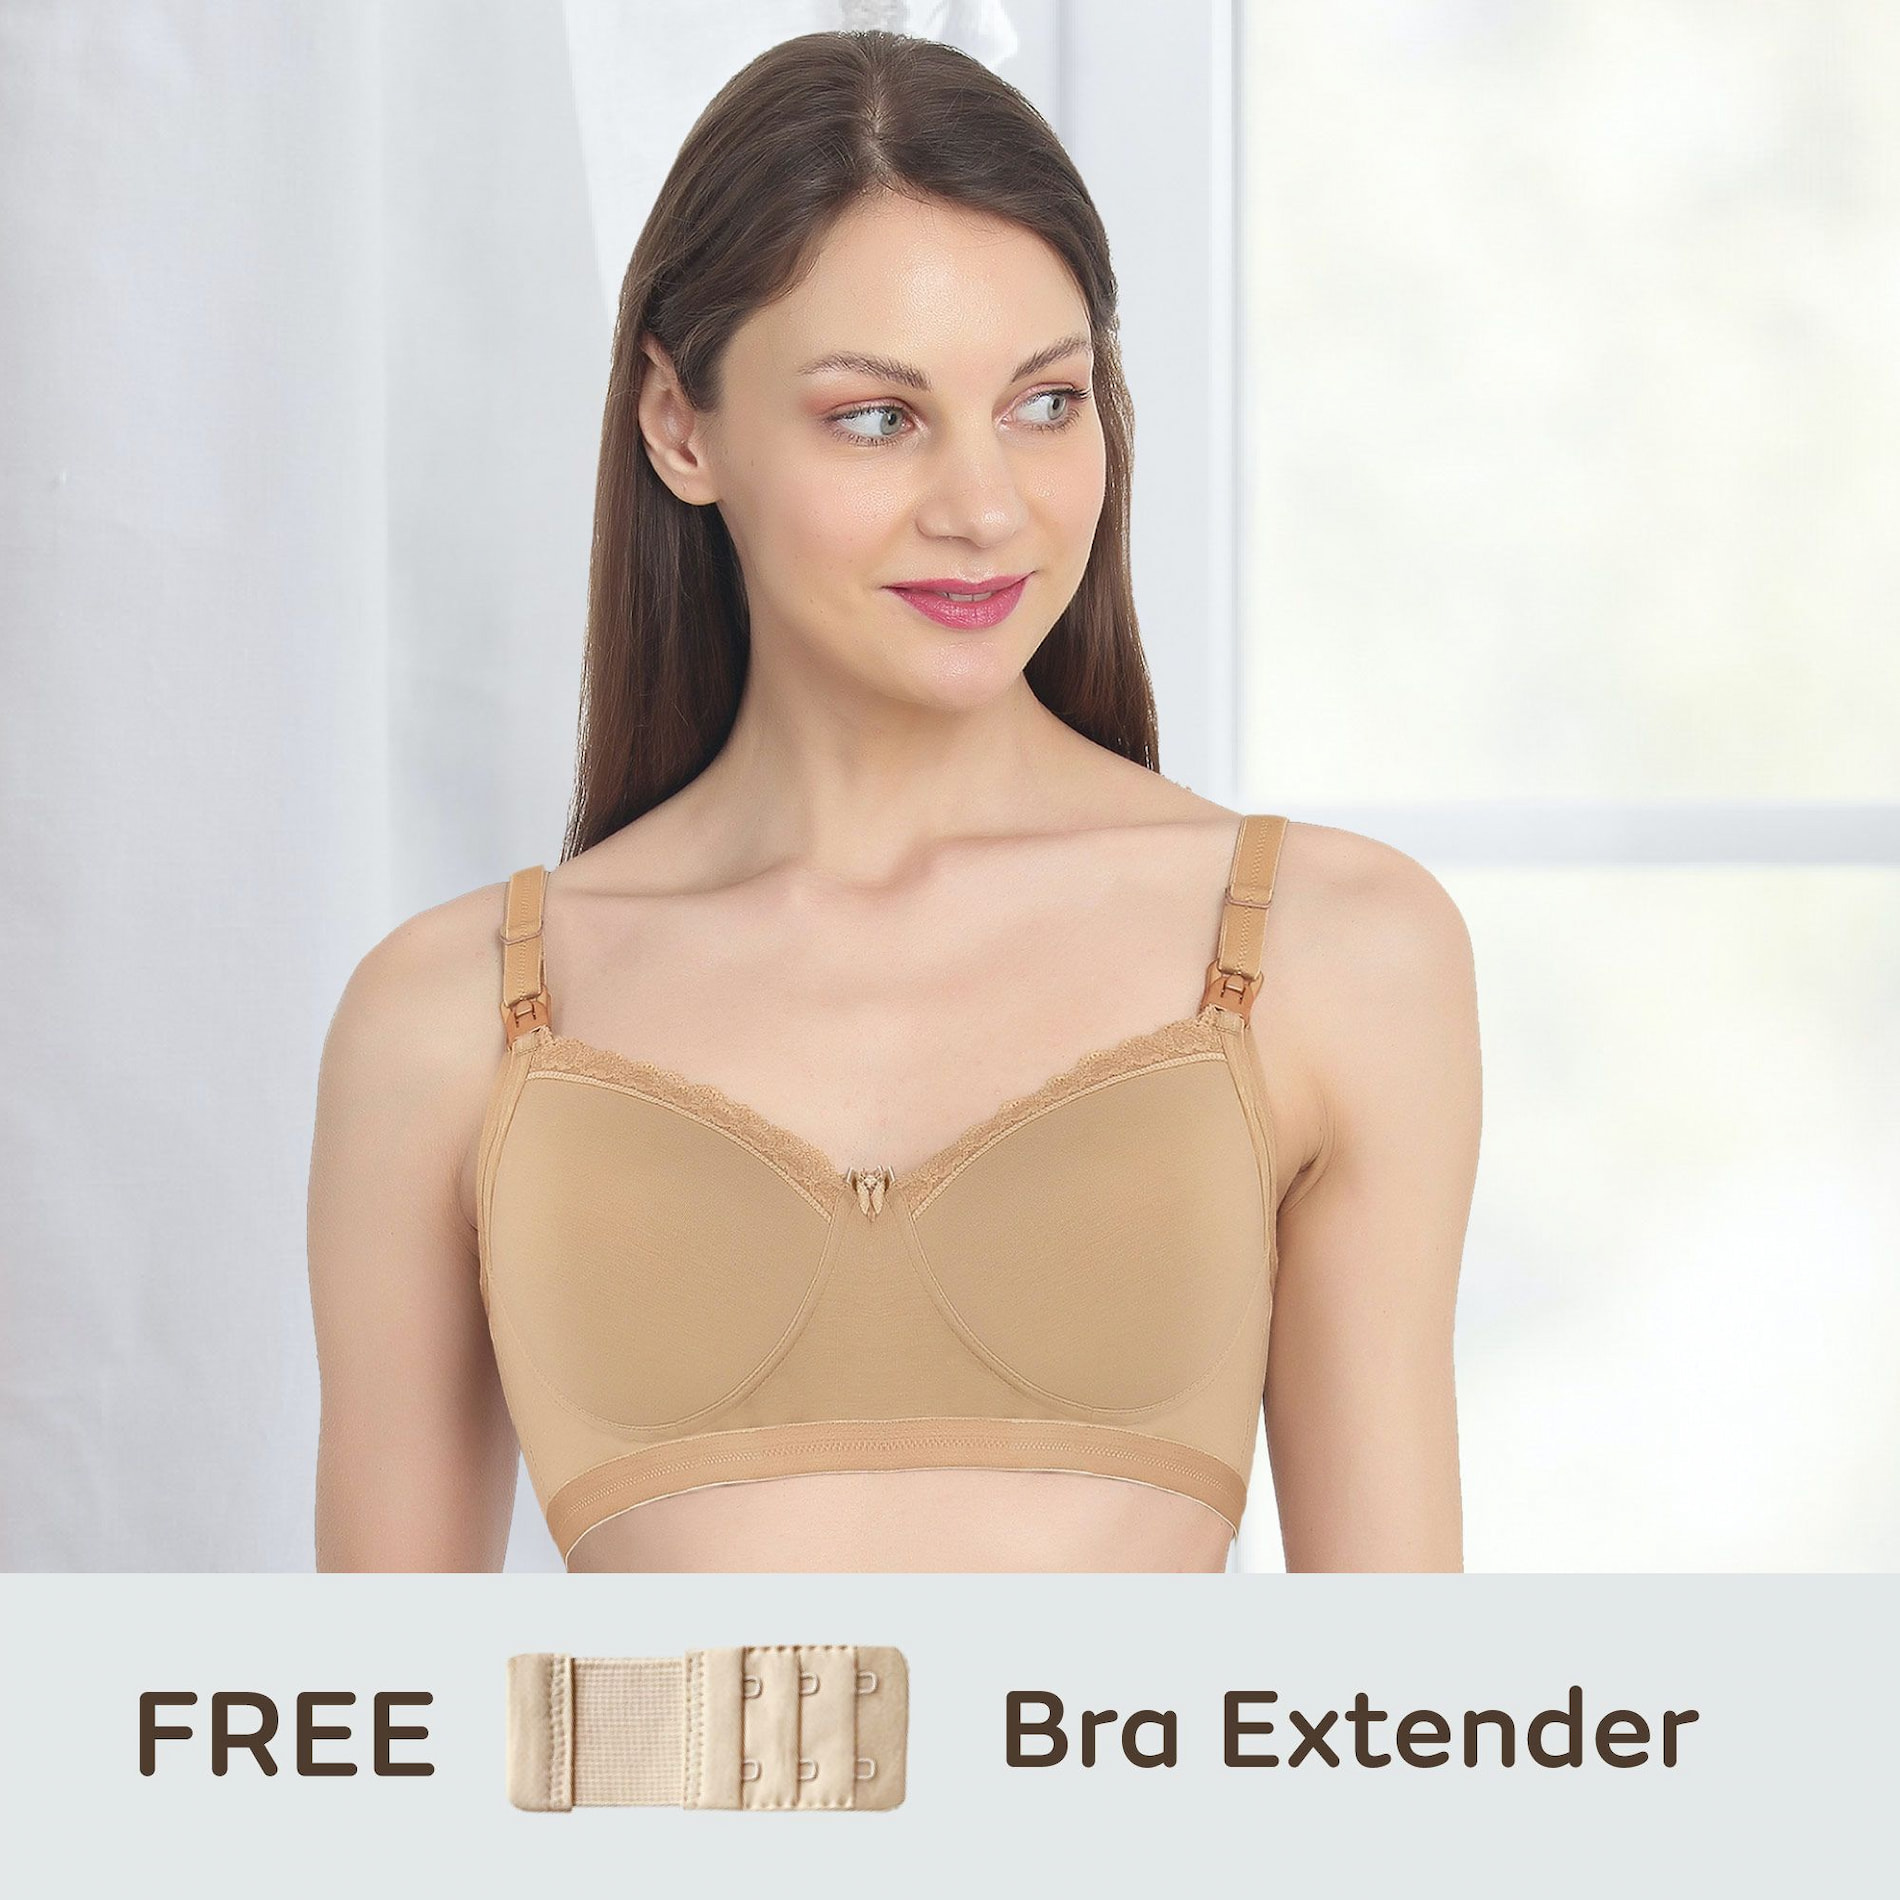 Mylo Light Padded Maternity/Nursing Bra with free bra extender-Skin 34B